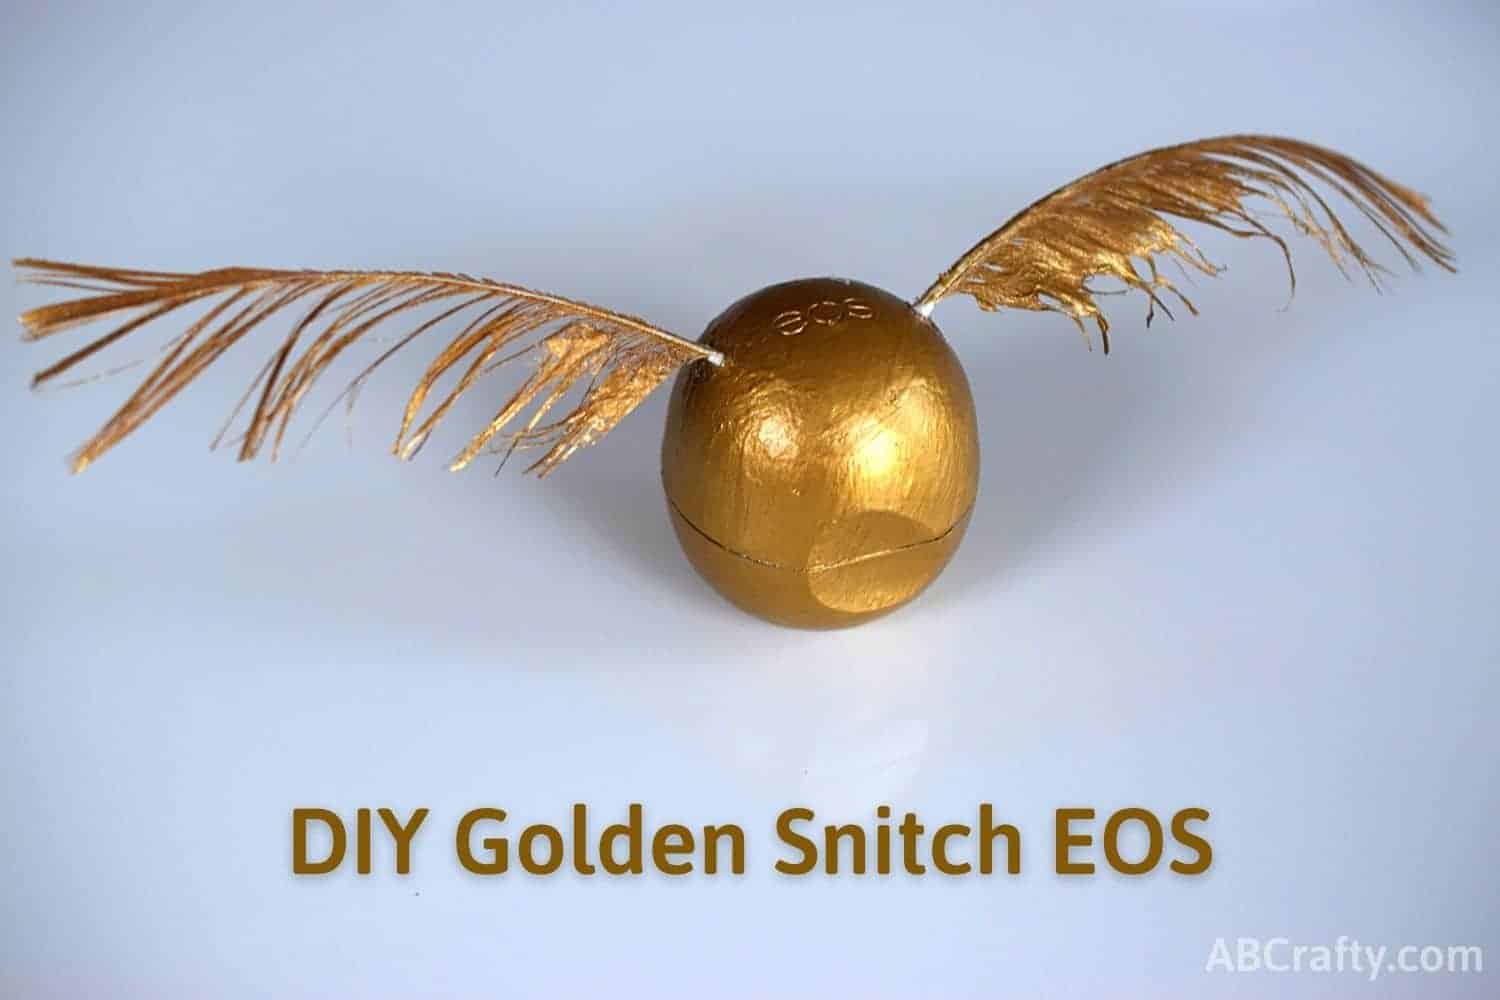 Golden Snitch EOS Lip Balm - Make your own Harry Potter snitch lip balm